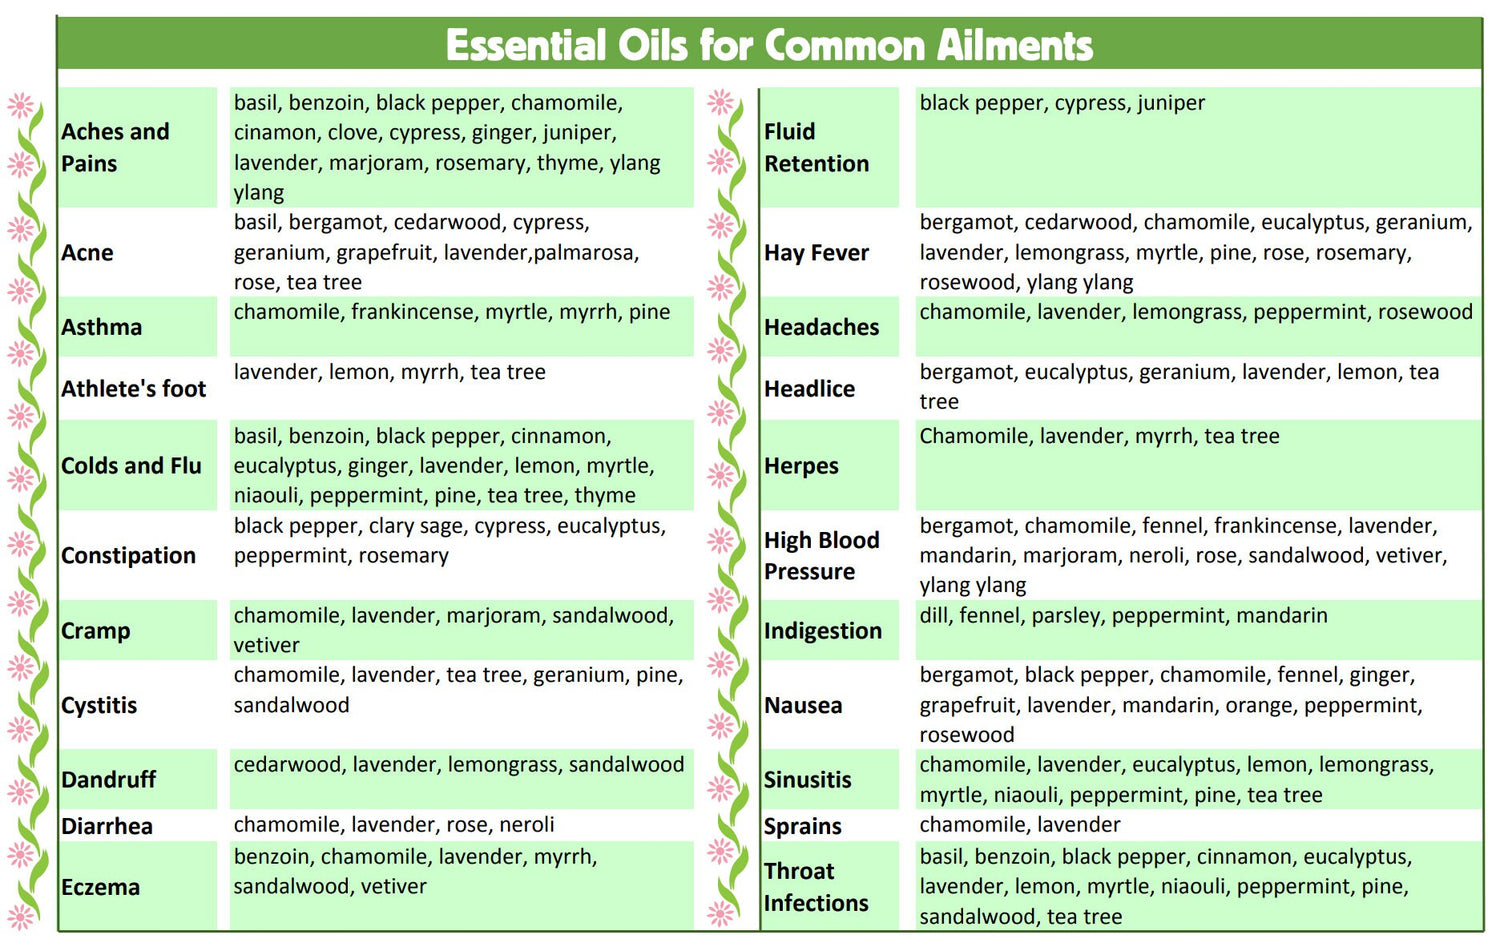 Lime Essential Oil - Premium 100% Natural Therapeutic Grade - Oil Diffuser, Massage, Fragrance, Soap, Candles